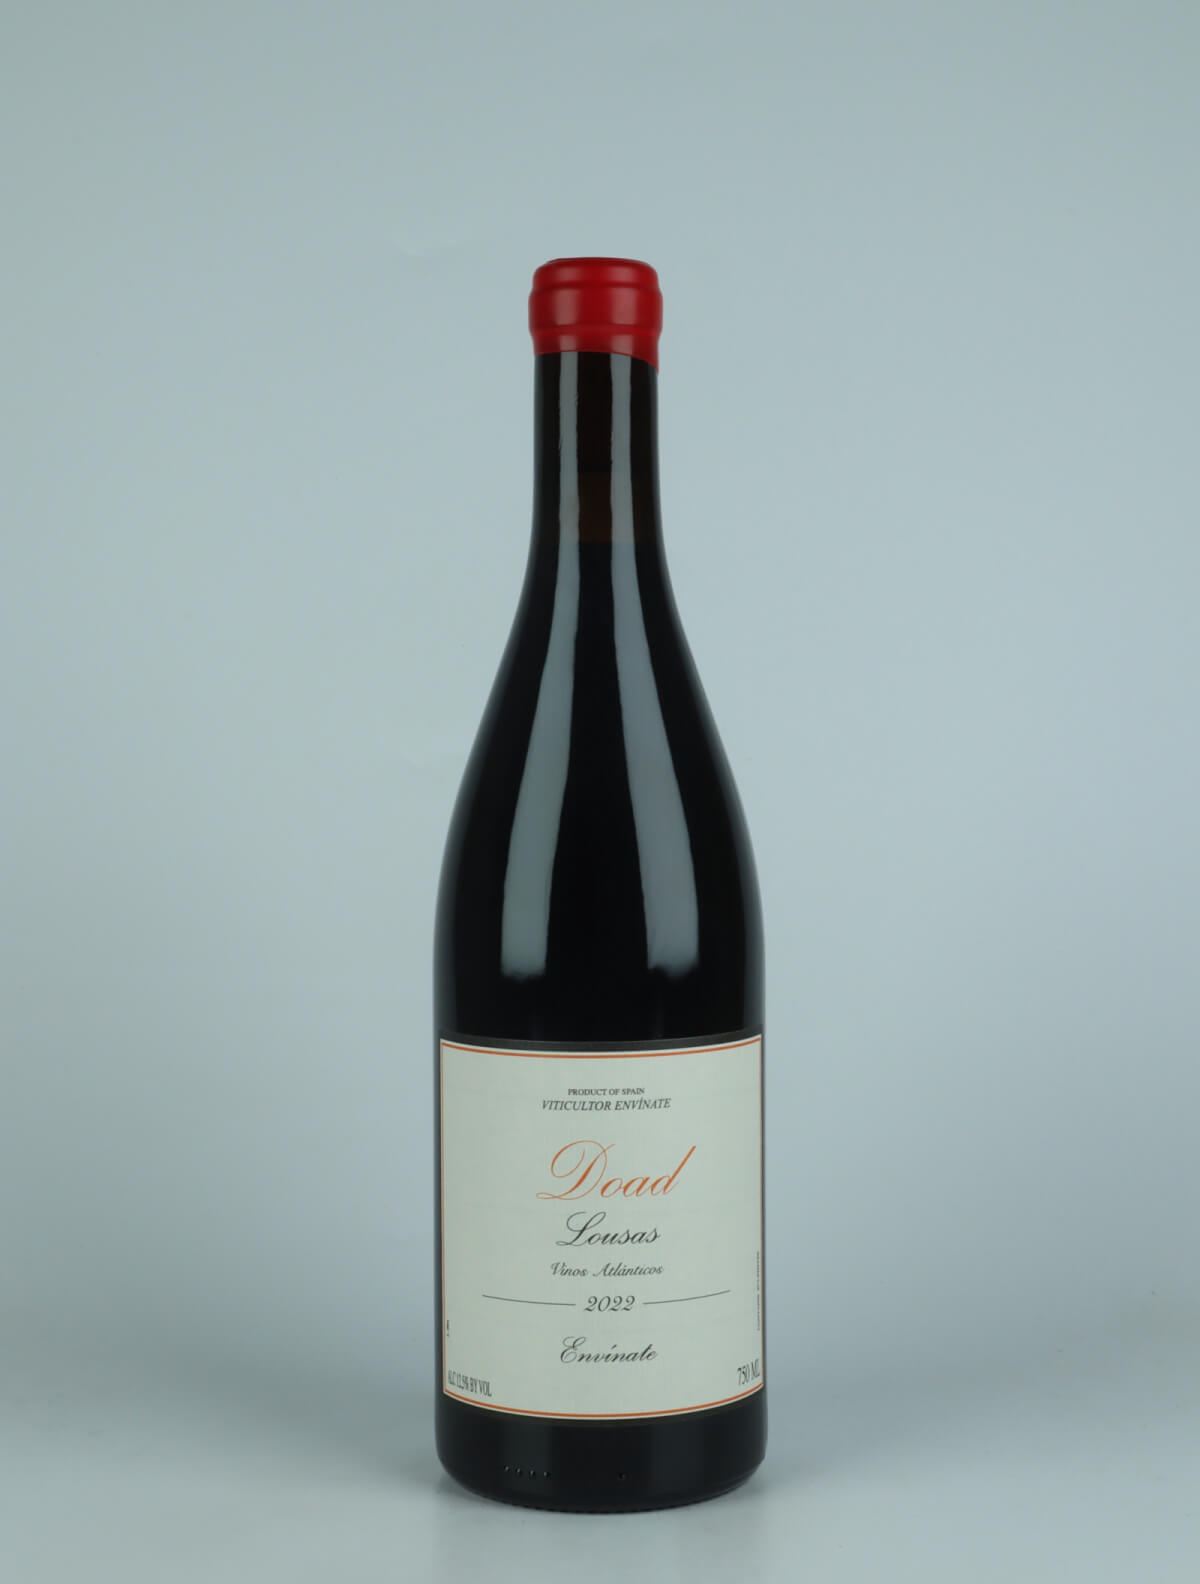 A bottle 2022 Doad - Ribeira Sacra Red wine from Envínate, Ribeira Sacra in Spain